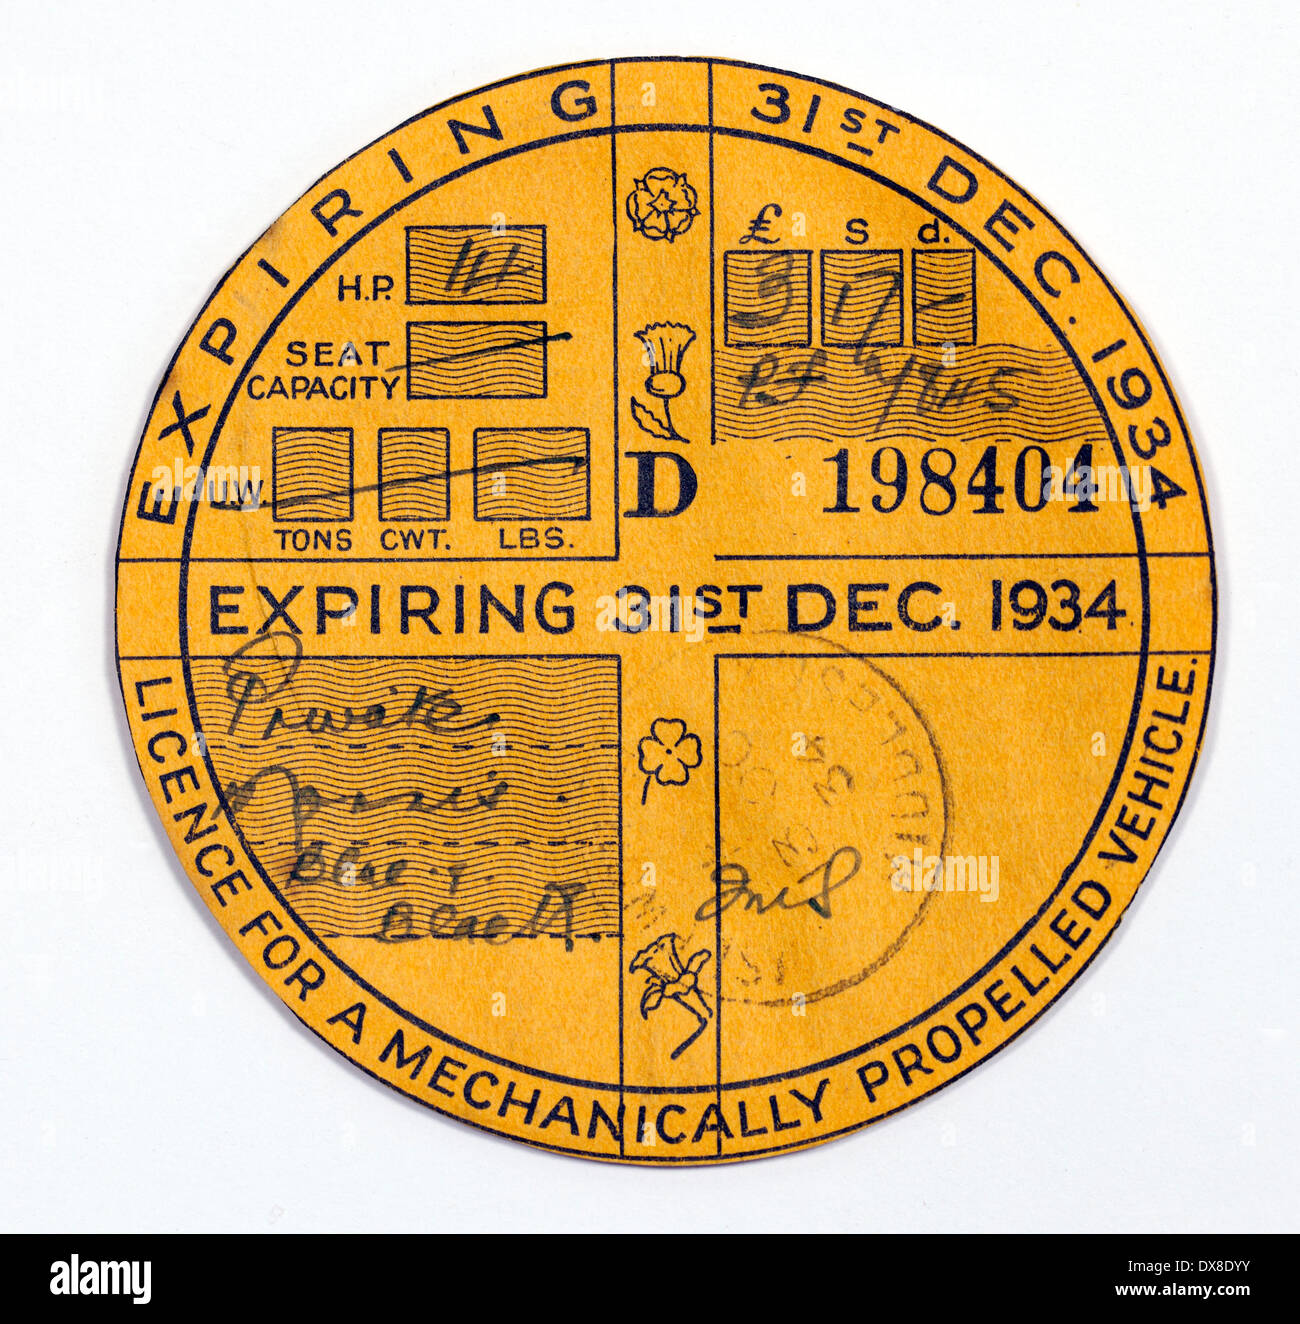 Dec 1934 tax disc Stock Photo